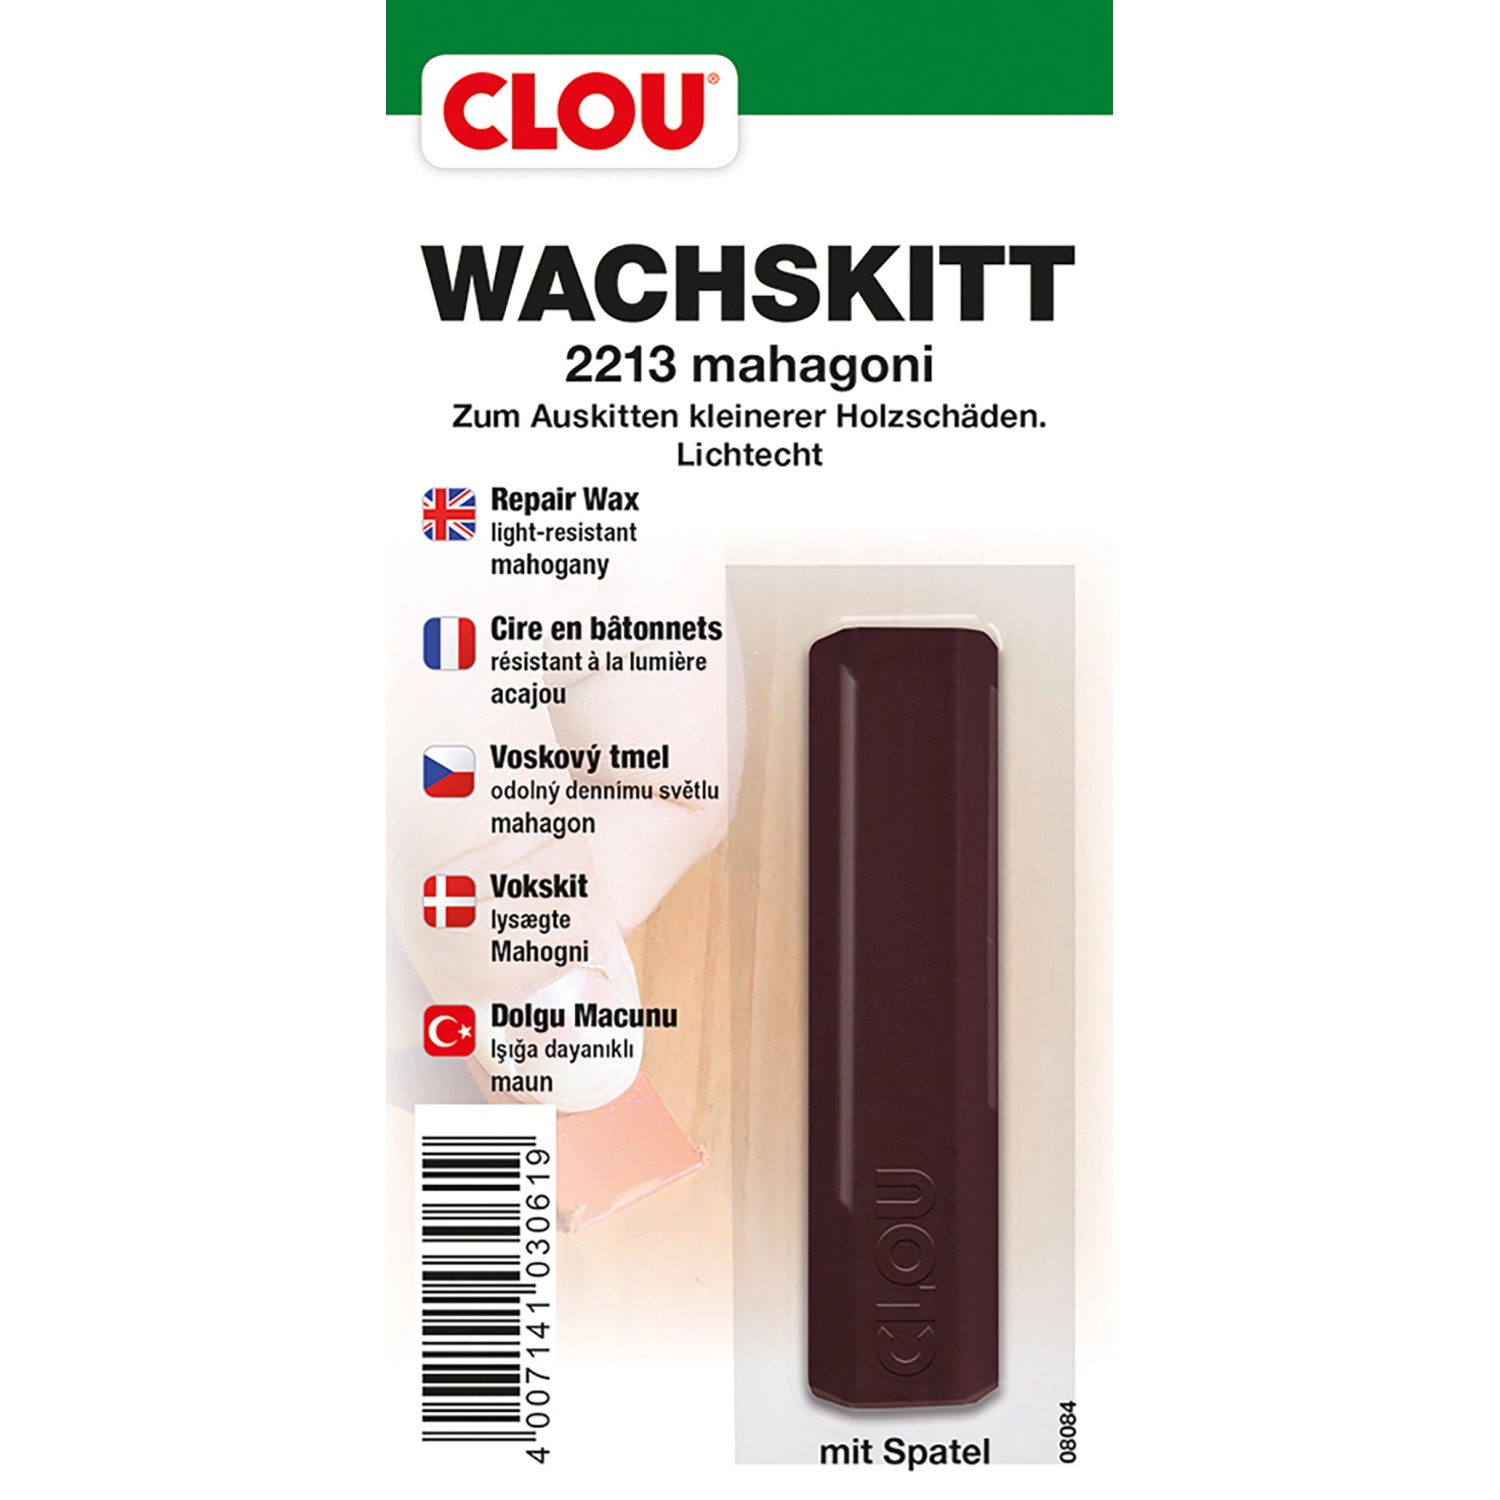 Clou Wachskitt Mahagoni von CLOU